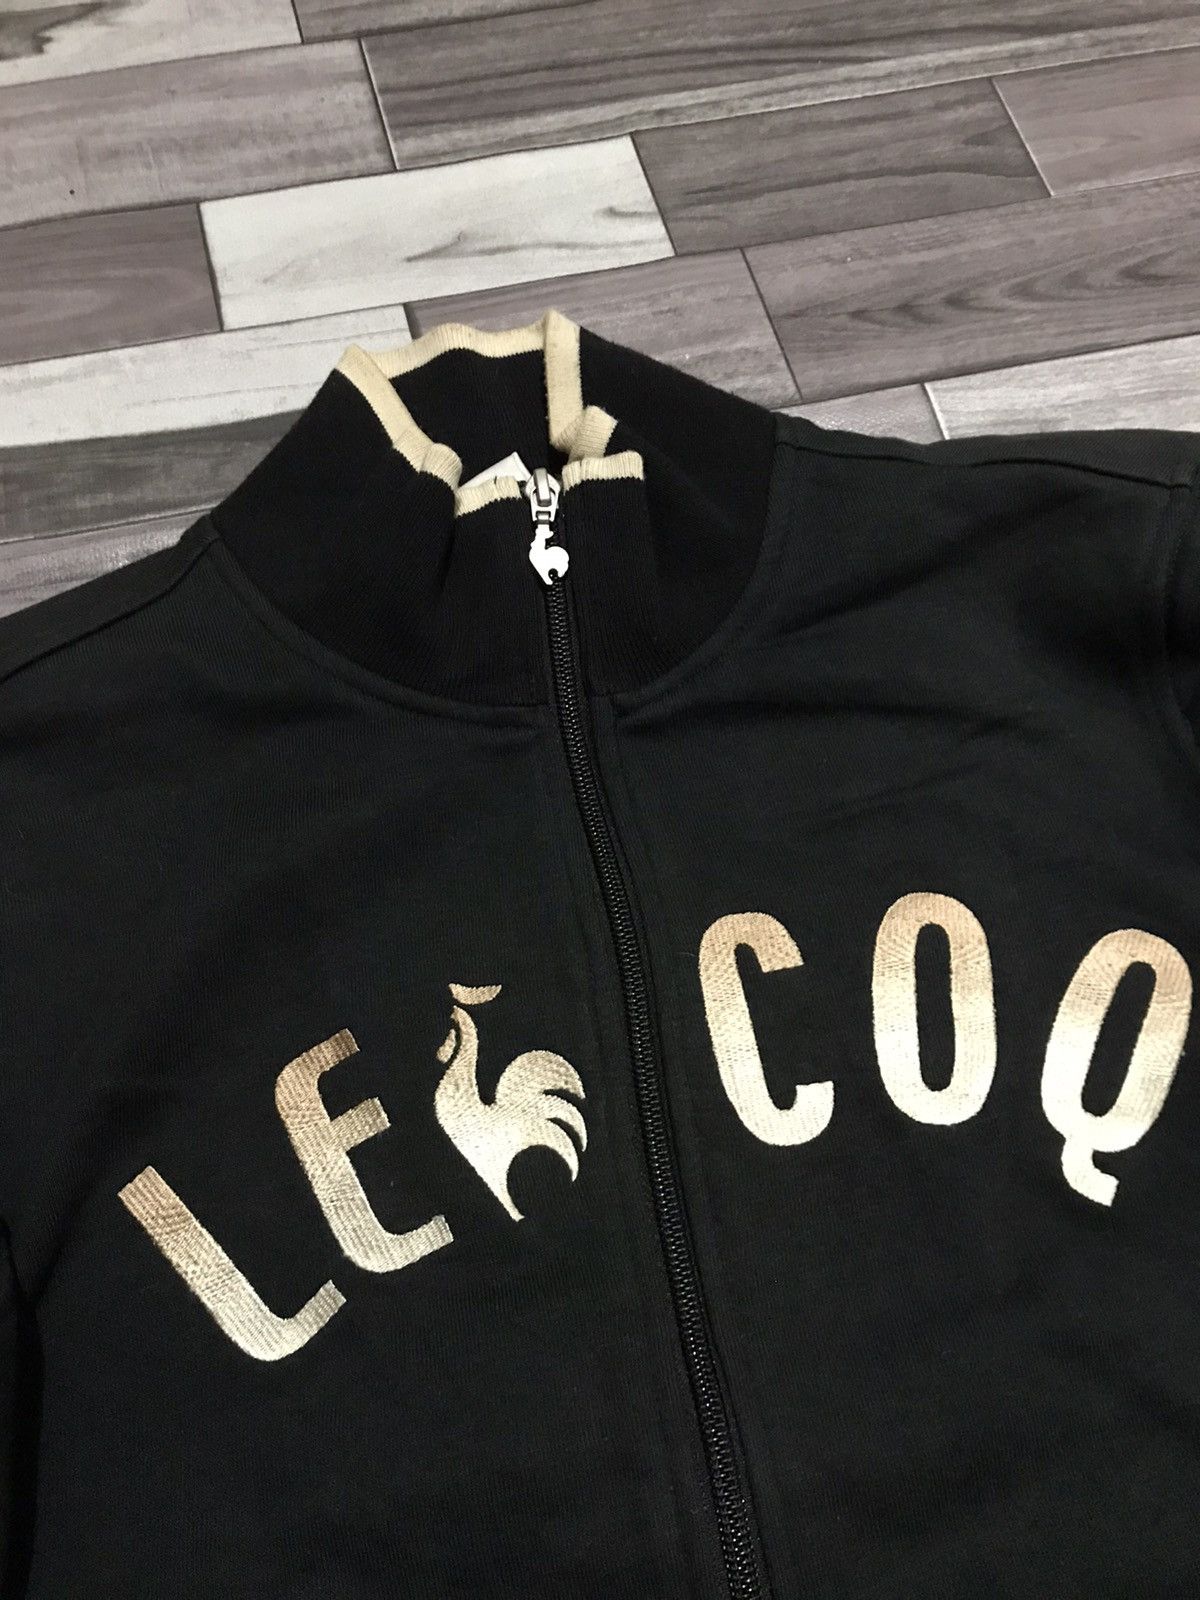 Le Coq Sportif - Lecoq Sportif Spellout Sweater Jacket -R9 - 2